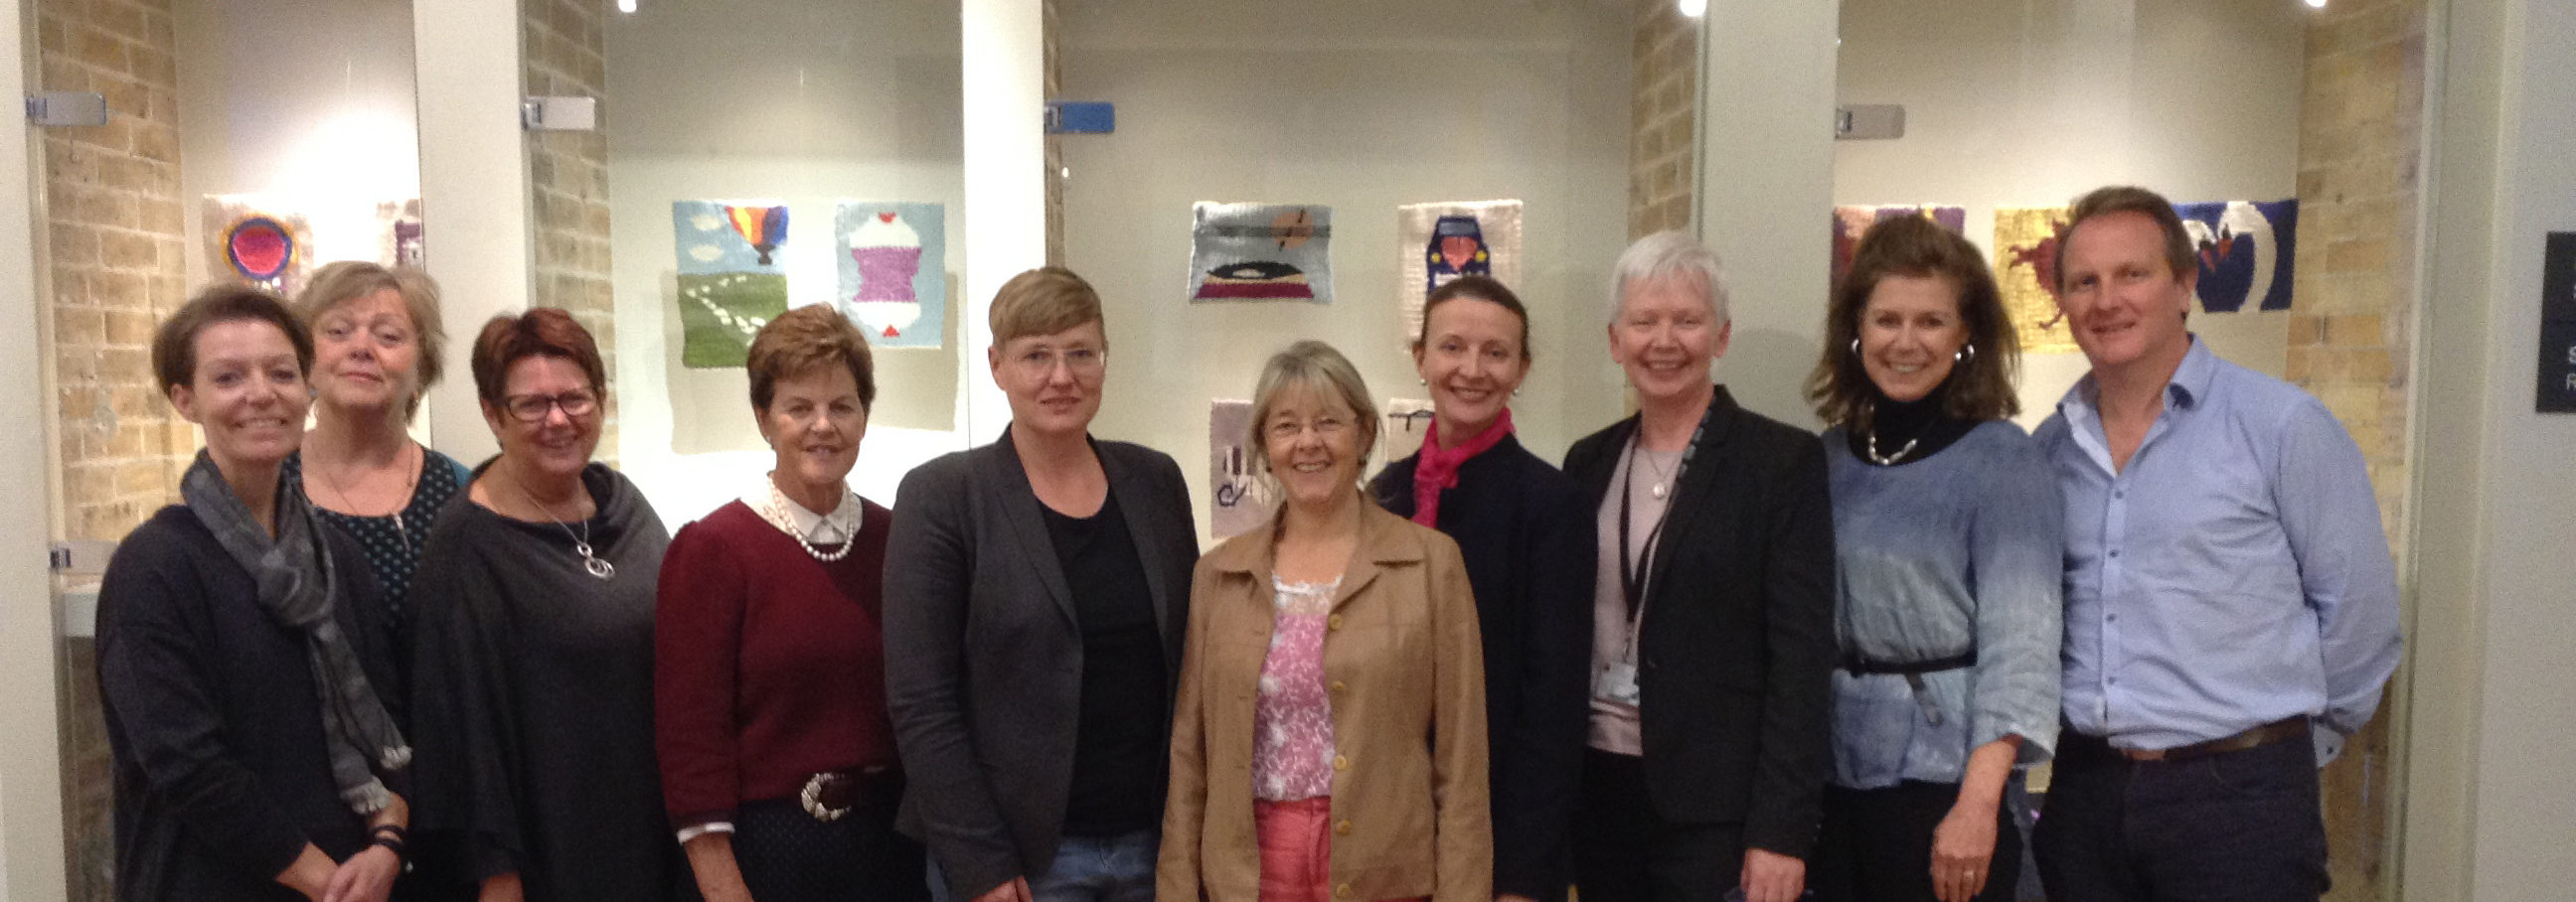 Academic Colleagues from Diakonova University, Oslo, Norway visit School of Nursing & Midwifery